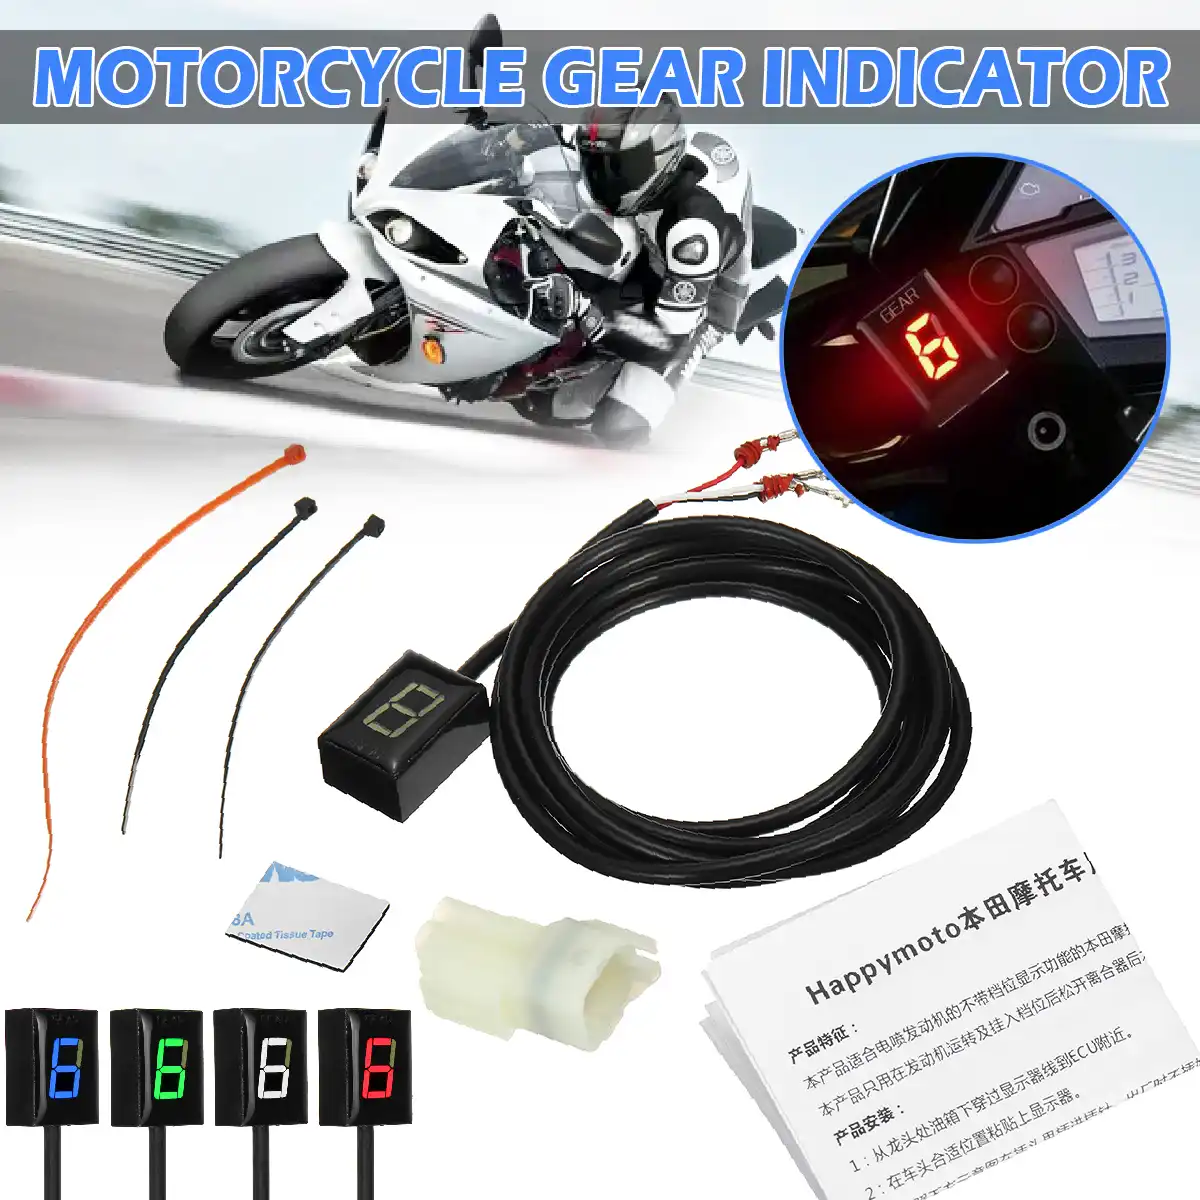 Waterproof LED Display Plug & Play Motorcycle Indicator Green-II 2010-2017 Version No Need to Cut Lines / Read ECU Date Only IDEA Motorbike Gear Indicator for Kawasaki 